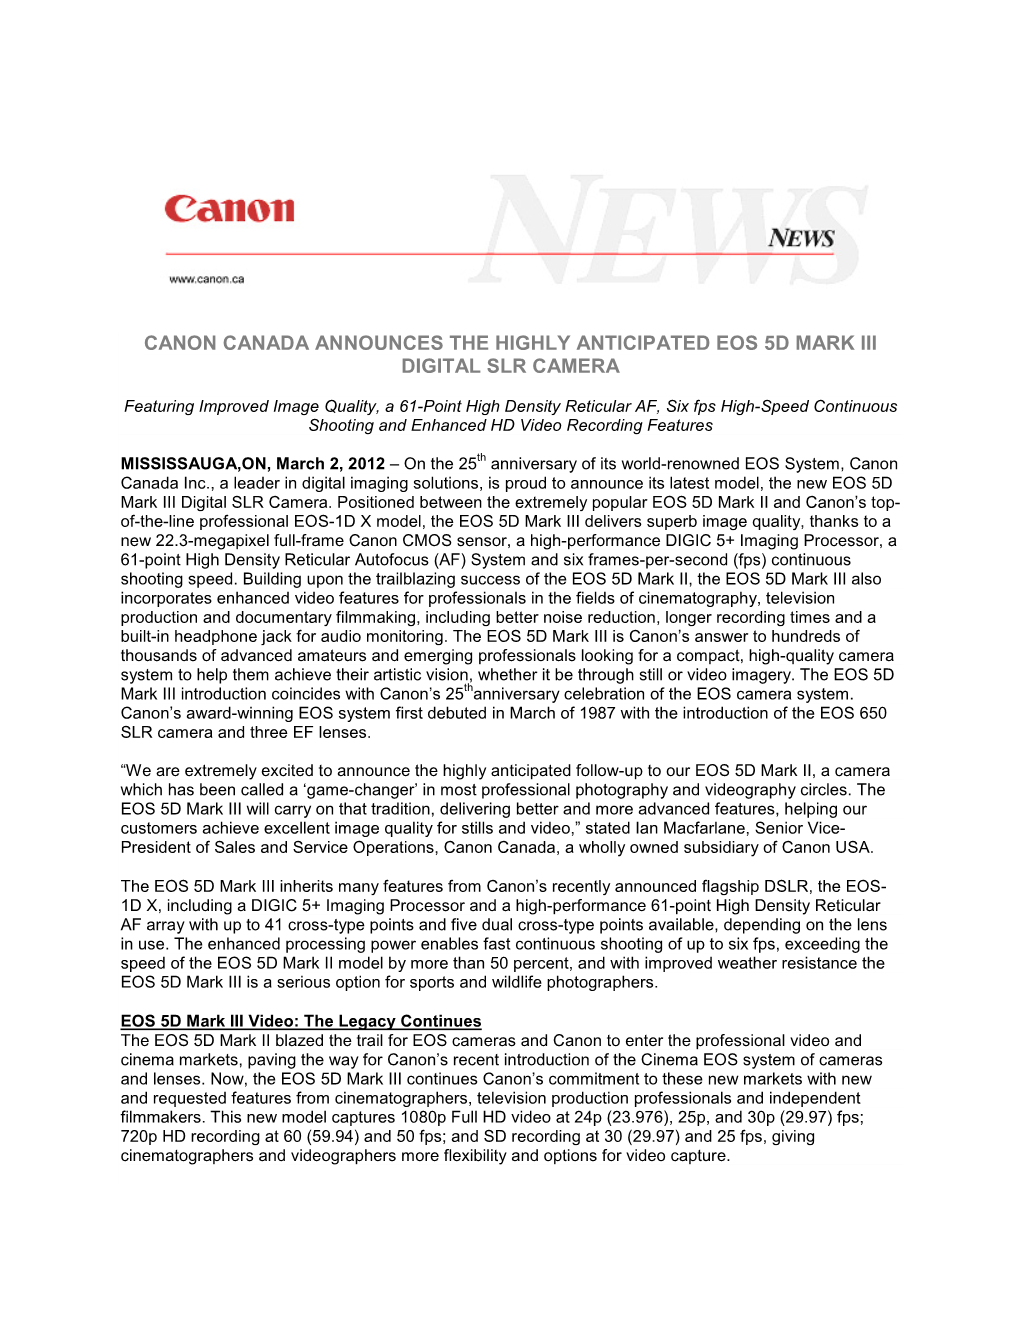 Canon Canada Announces the Highly Anticipated Eos 5D Mark Iii Digital Slr Camera